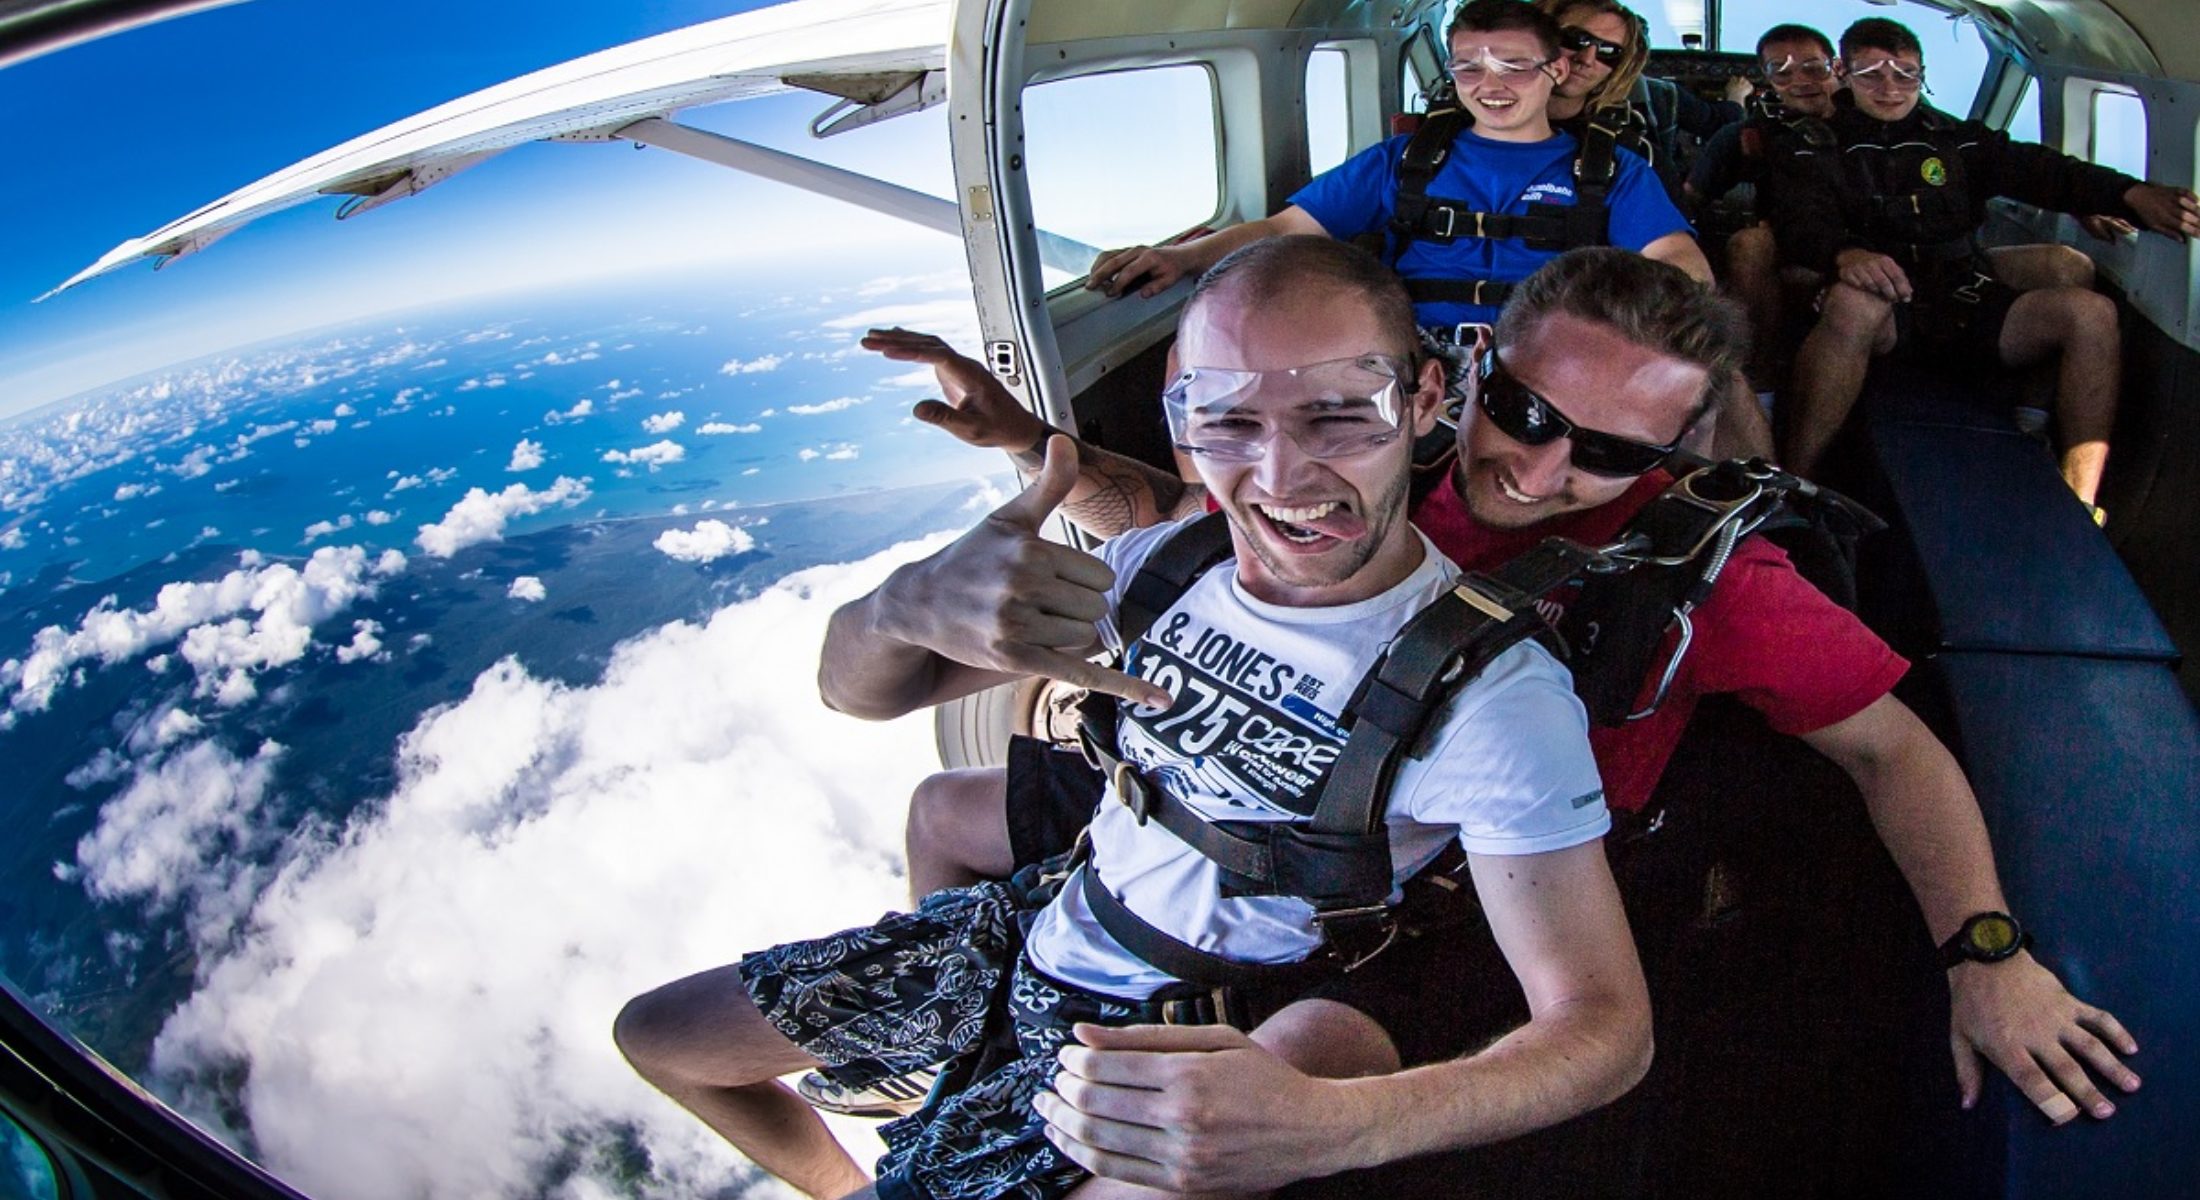 Sky Dive Australia Adrenaline Junkie Fun Activities With Friends Near Brisbane Moreton Bay Region